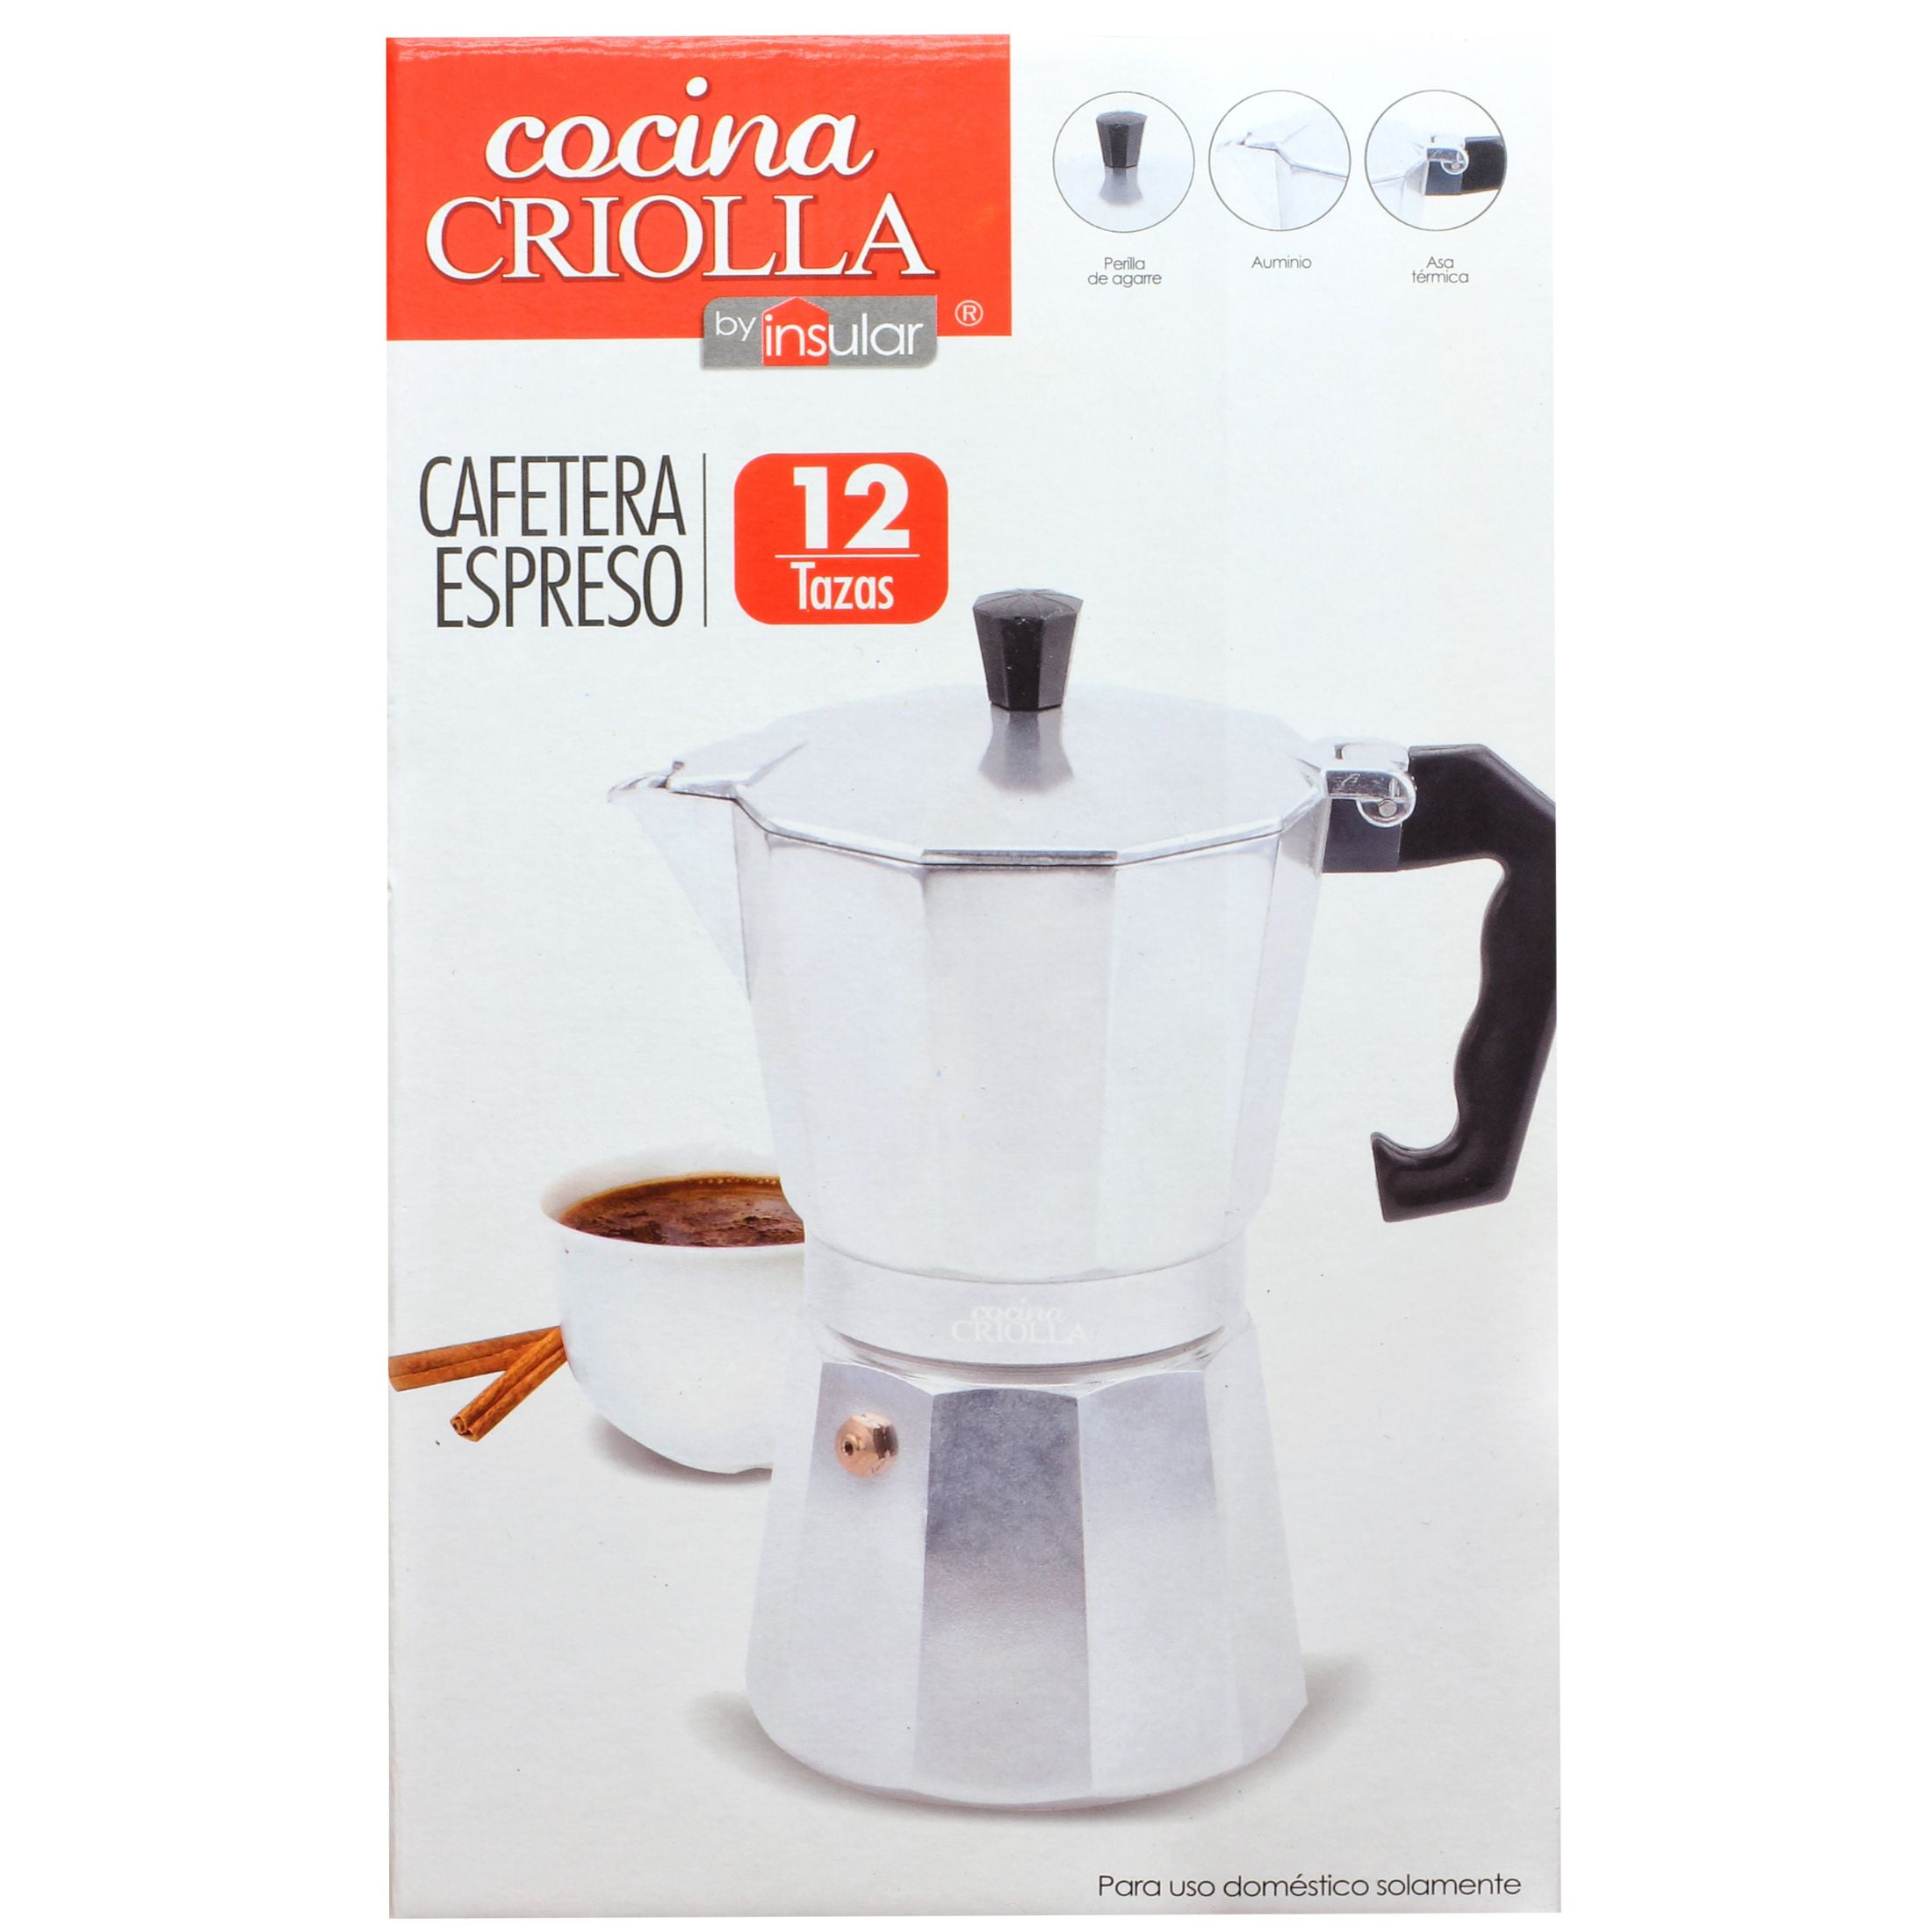 COCINA CRIOLLA 6 CUPS ALUMINIUM 5 MINUTES EXPRESS COFFEE MAKER